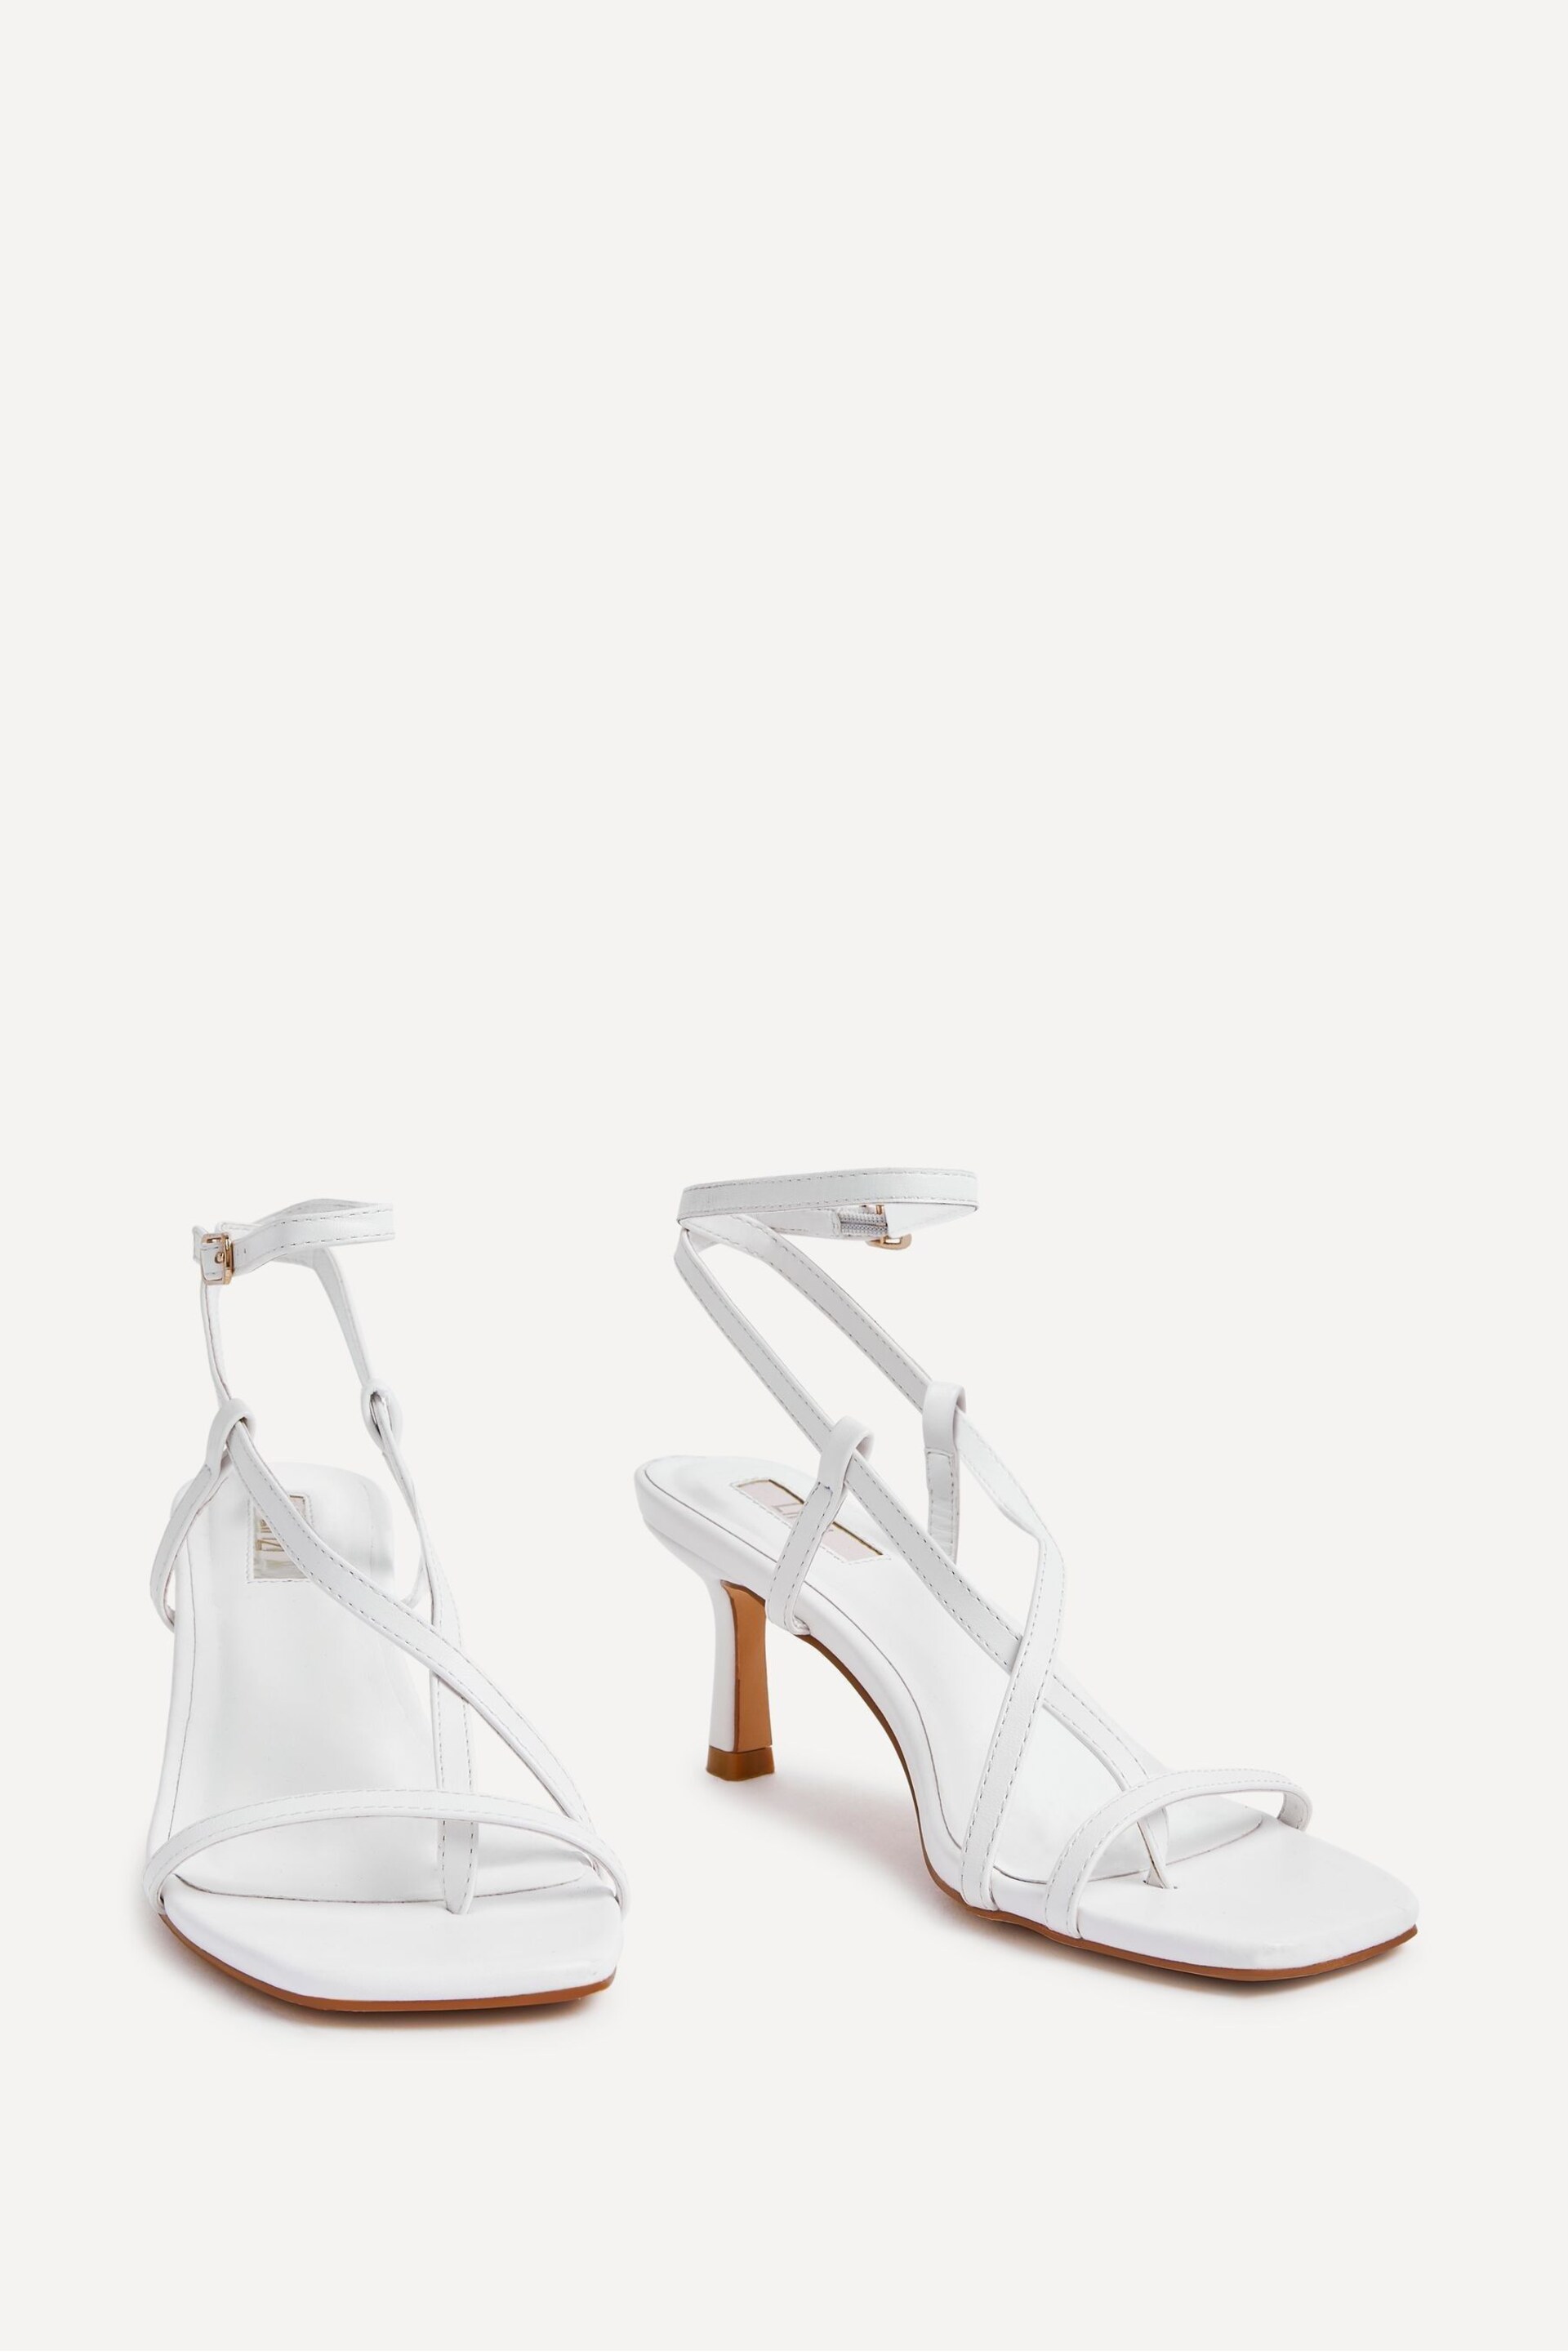 Linzi White Roxanne Strappy Square Toe Heels - Image 5 of 5